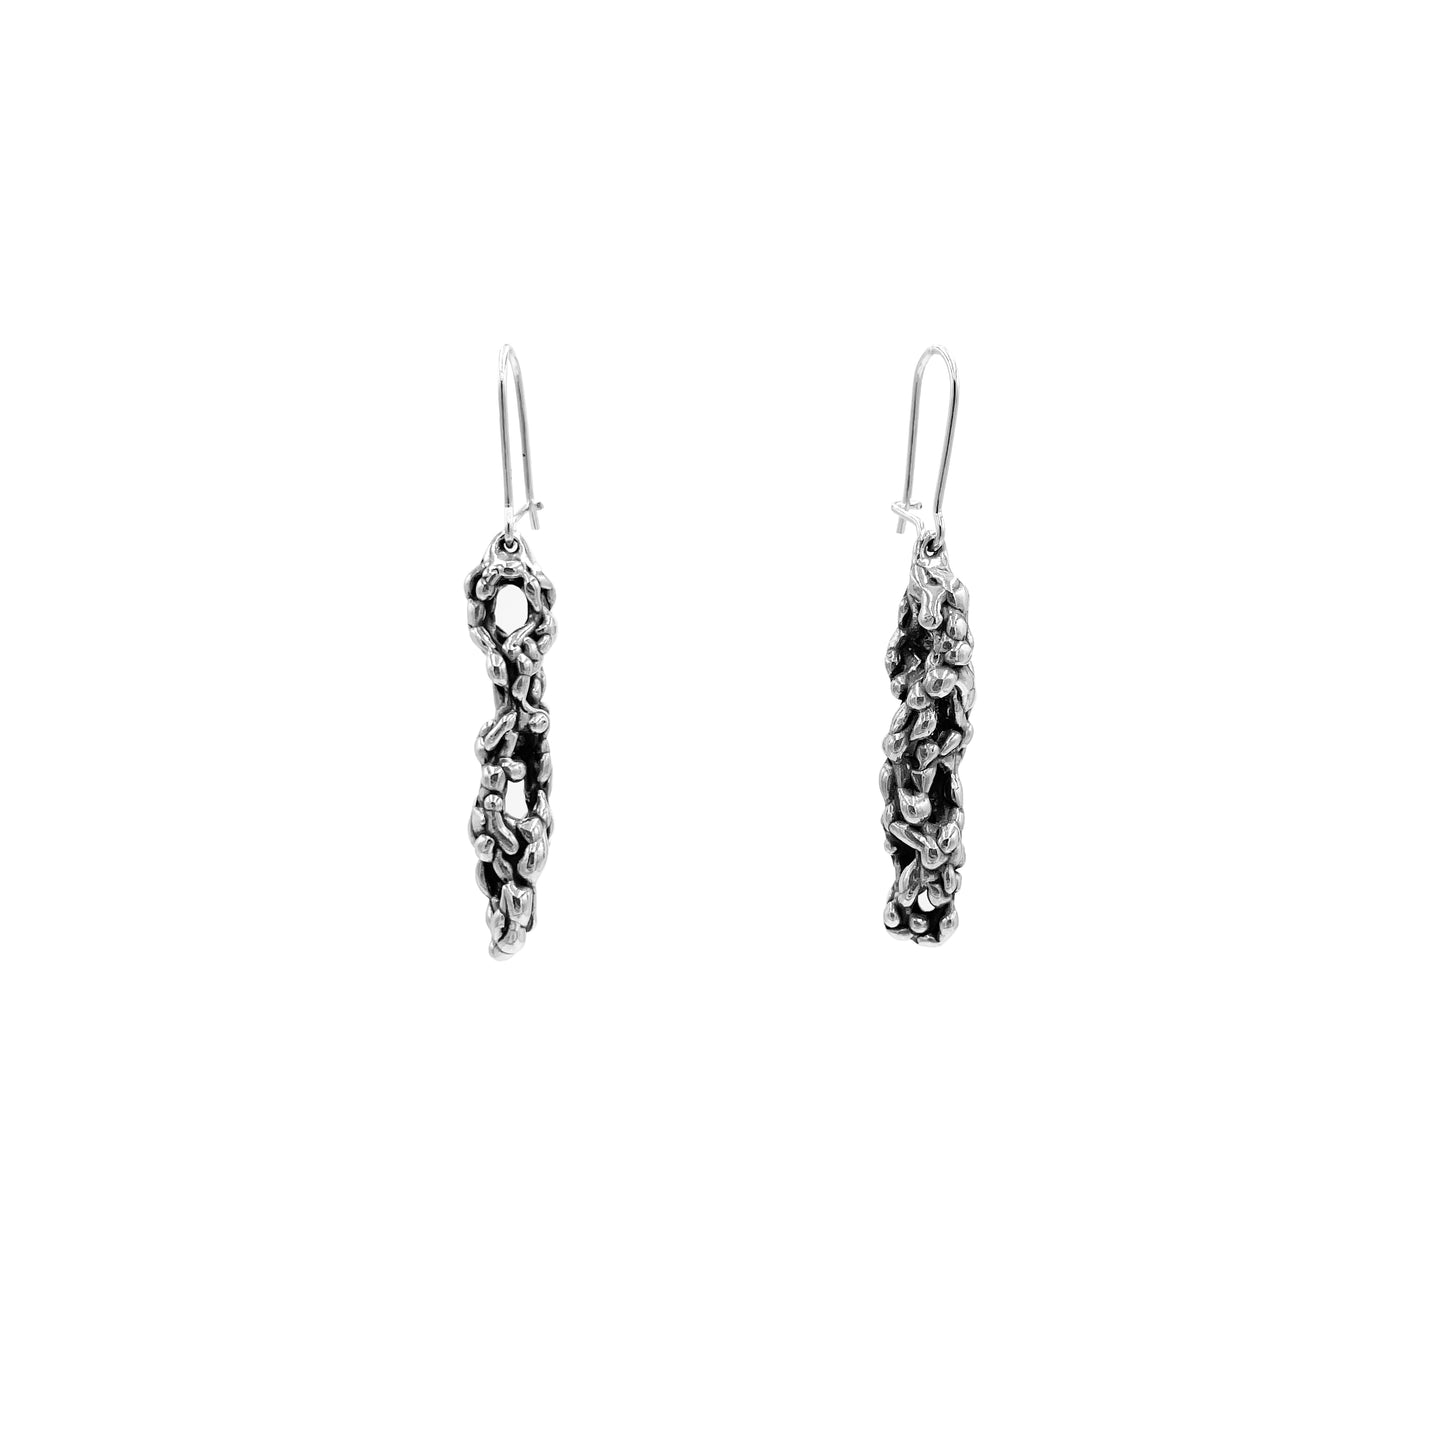 Sterling Silver Earrings Two Souls - Silver Asymmetric Ring - Solid Silver Earrings - Unique Style Earrings - Bubbly Earrings -Nice Earrings